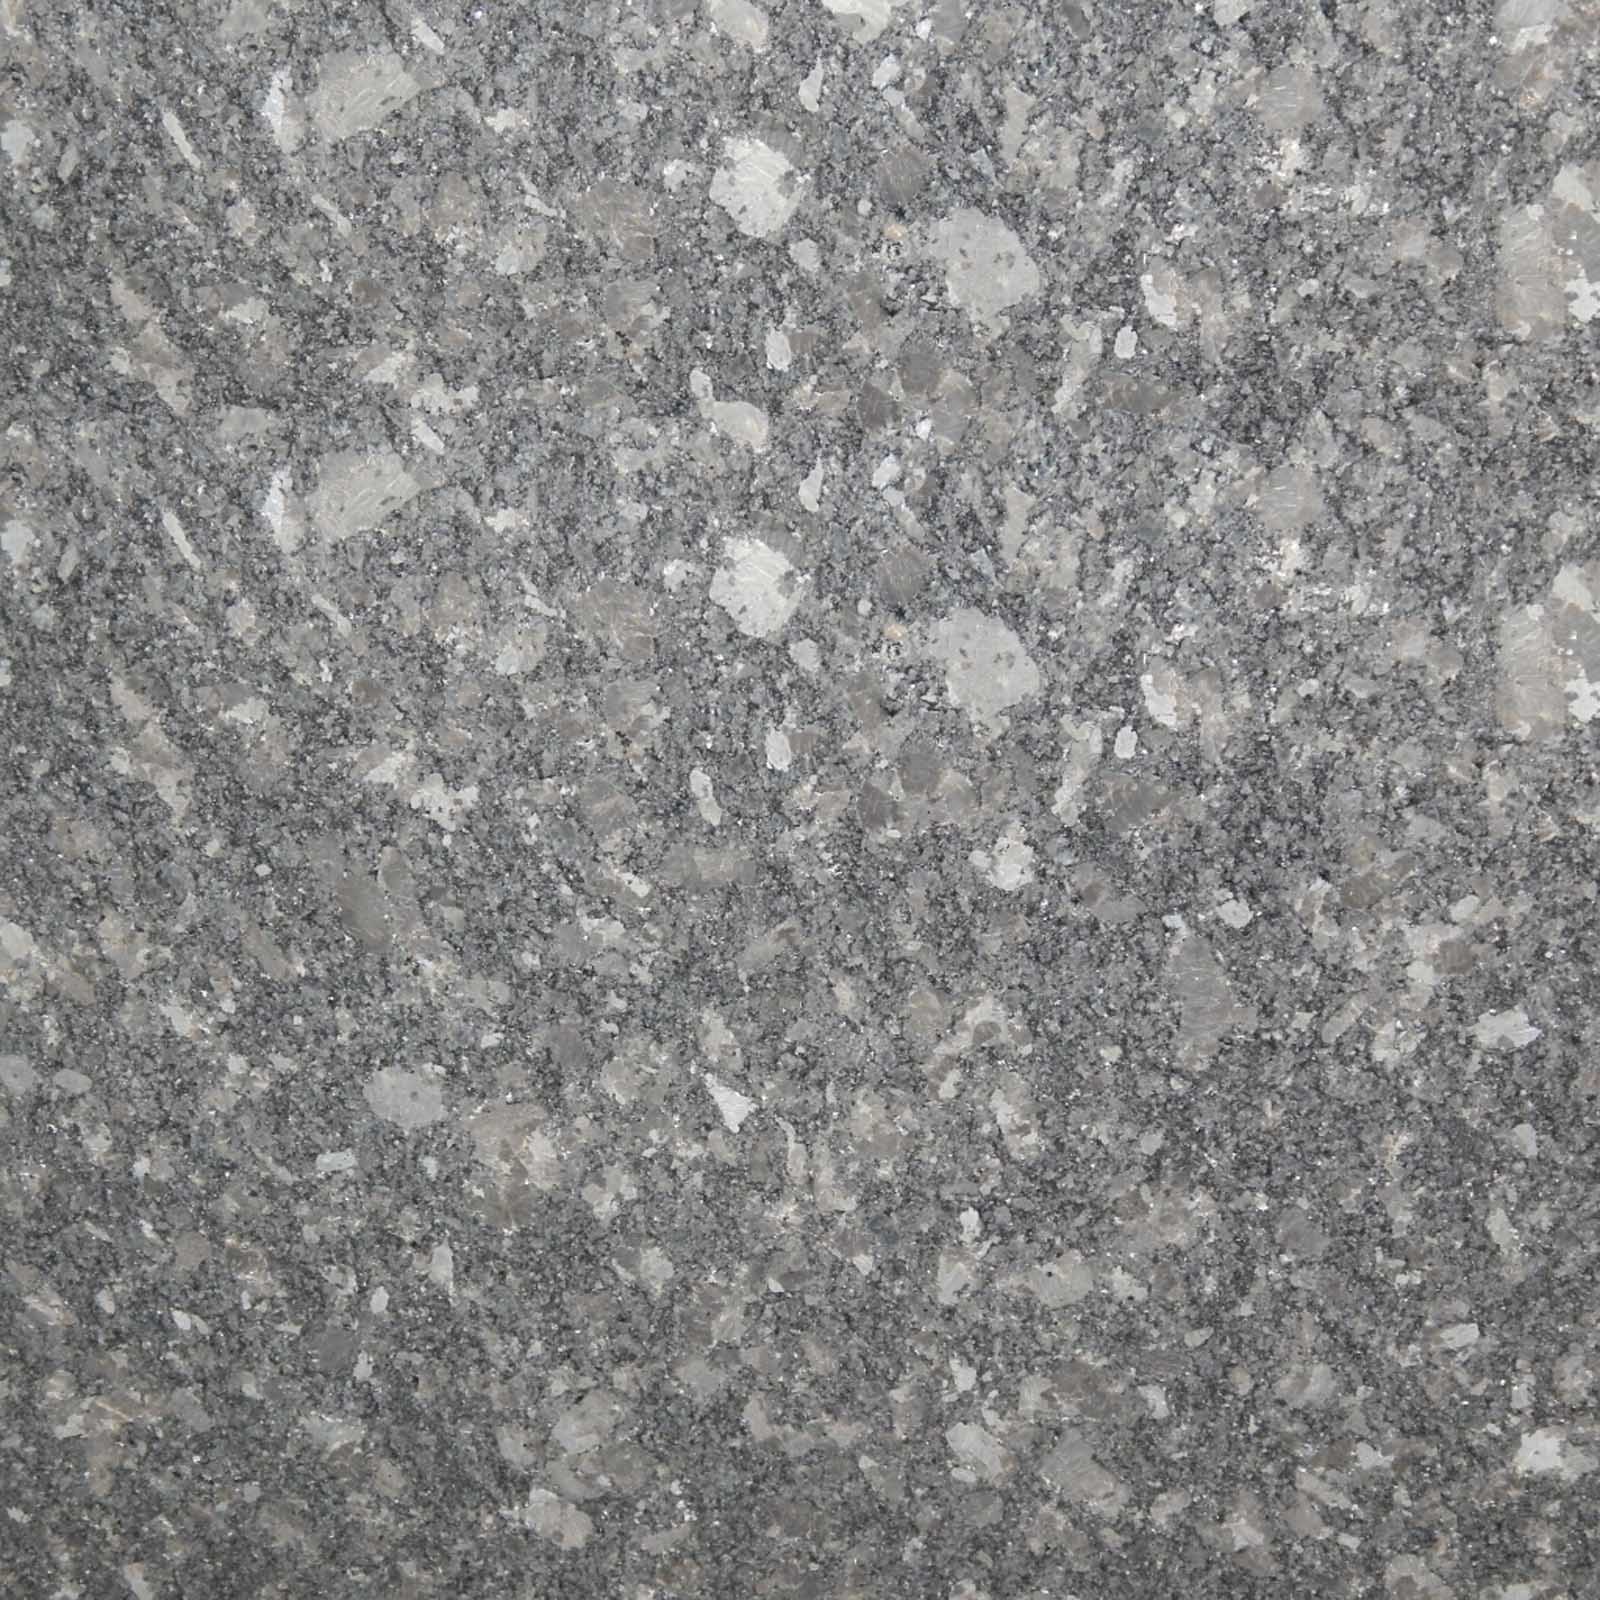 Steel Grey  Granite  Natural Stone  Exporter Manufacturer 